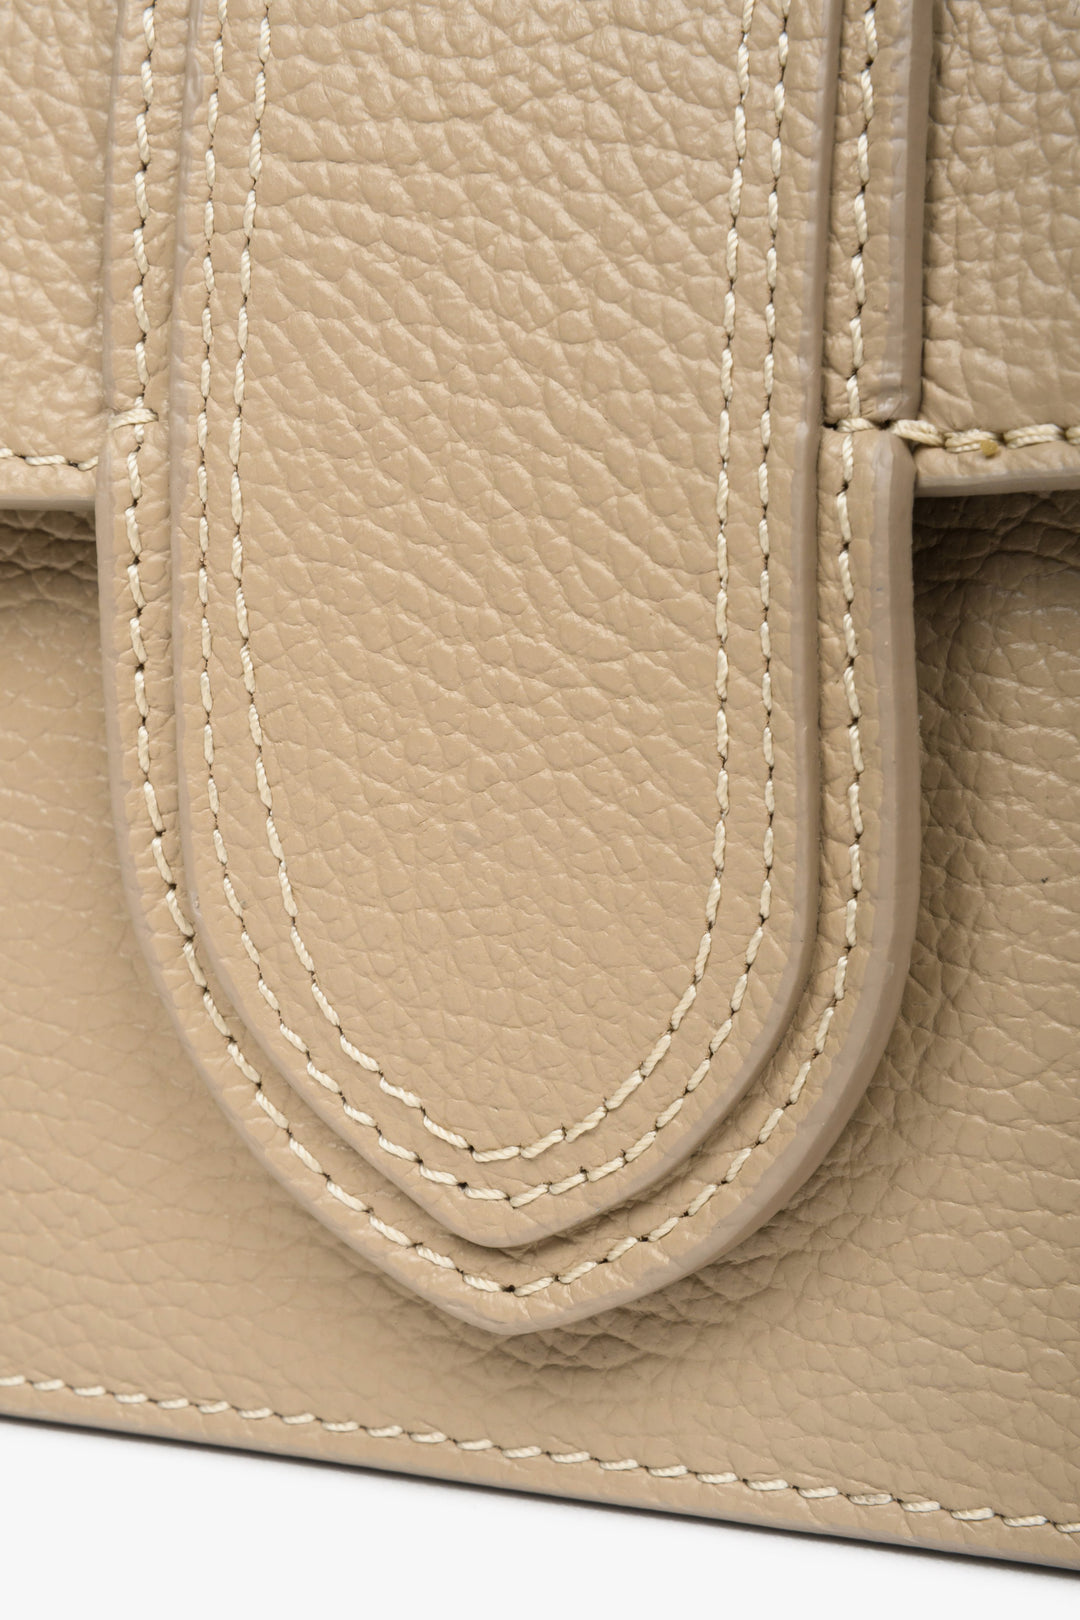 Sand beige Estro women's leather handbag - close-up of decorative clasp.